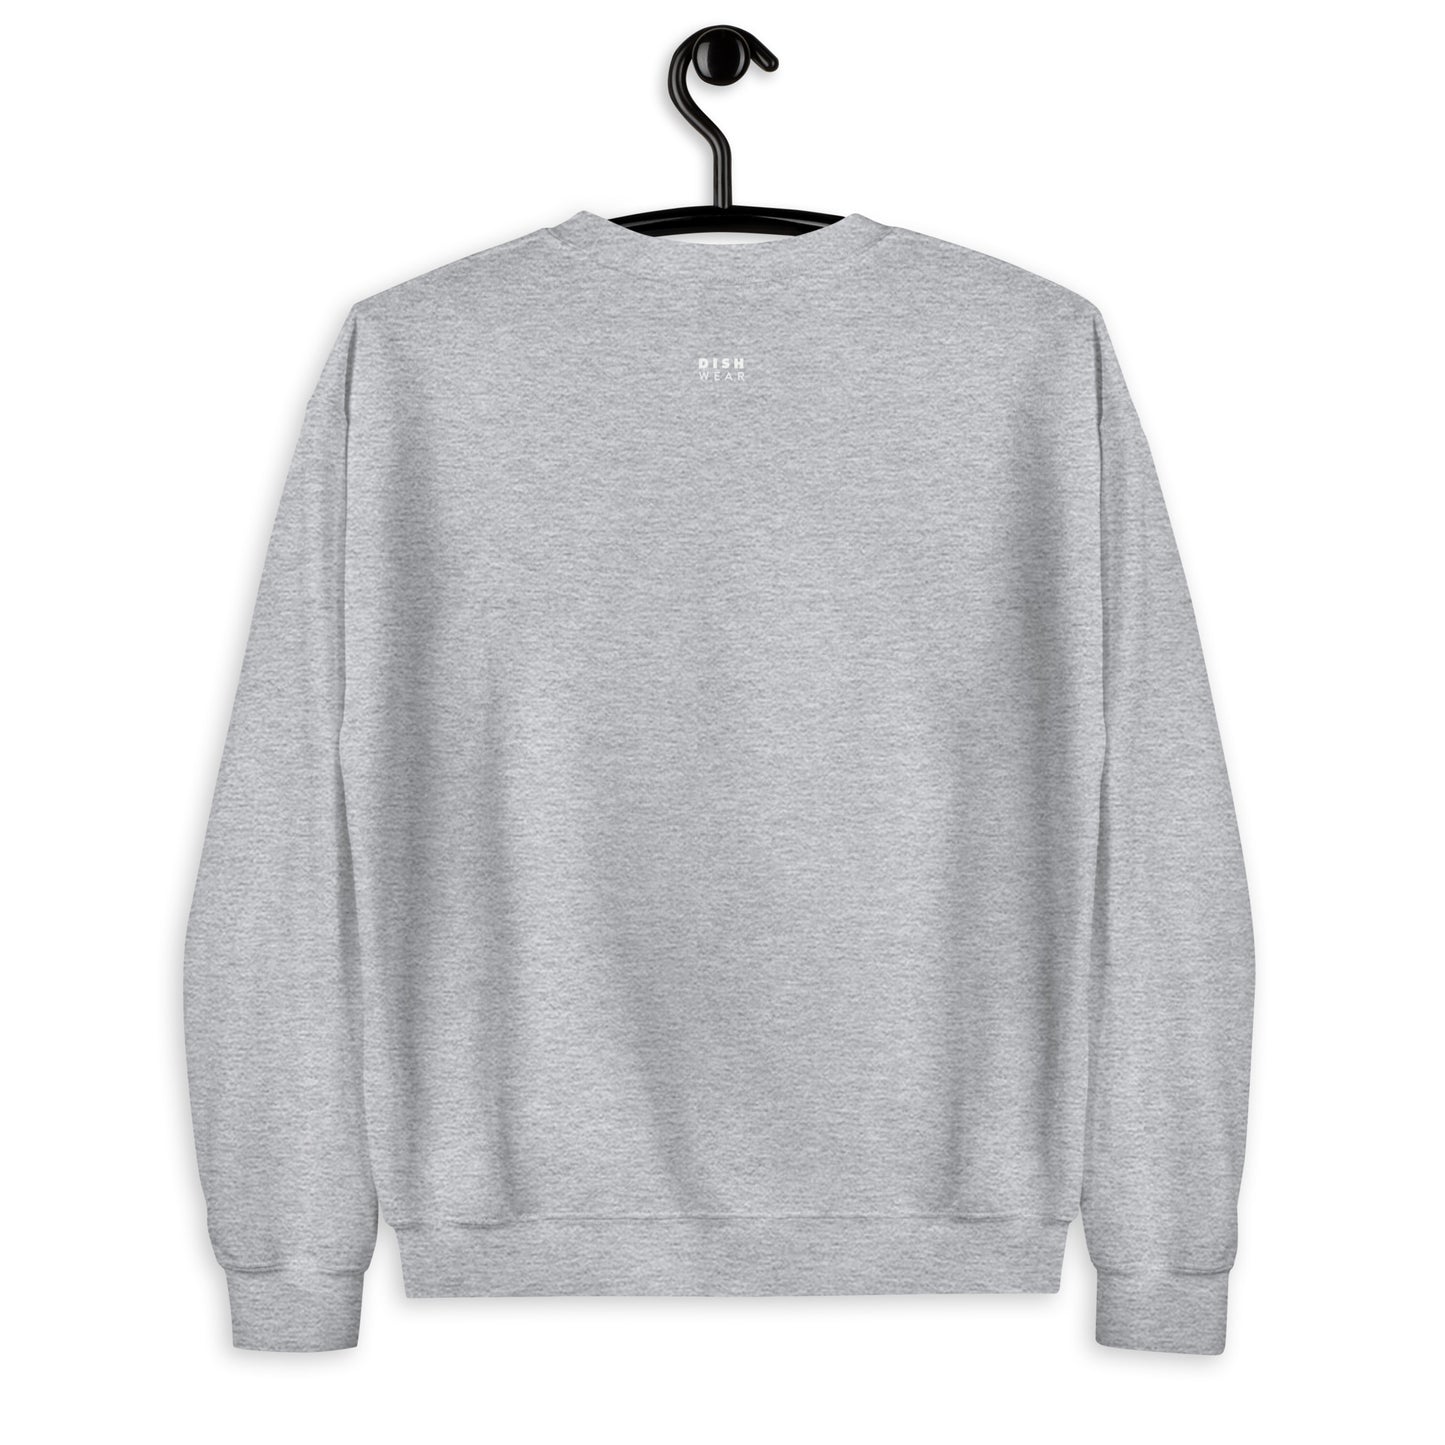 Mayo Sweatshirt - Arched Font